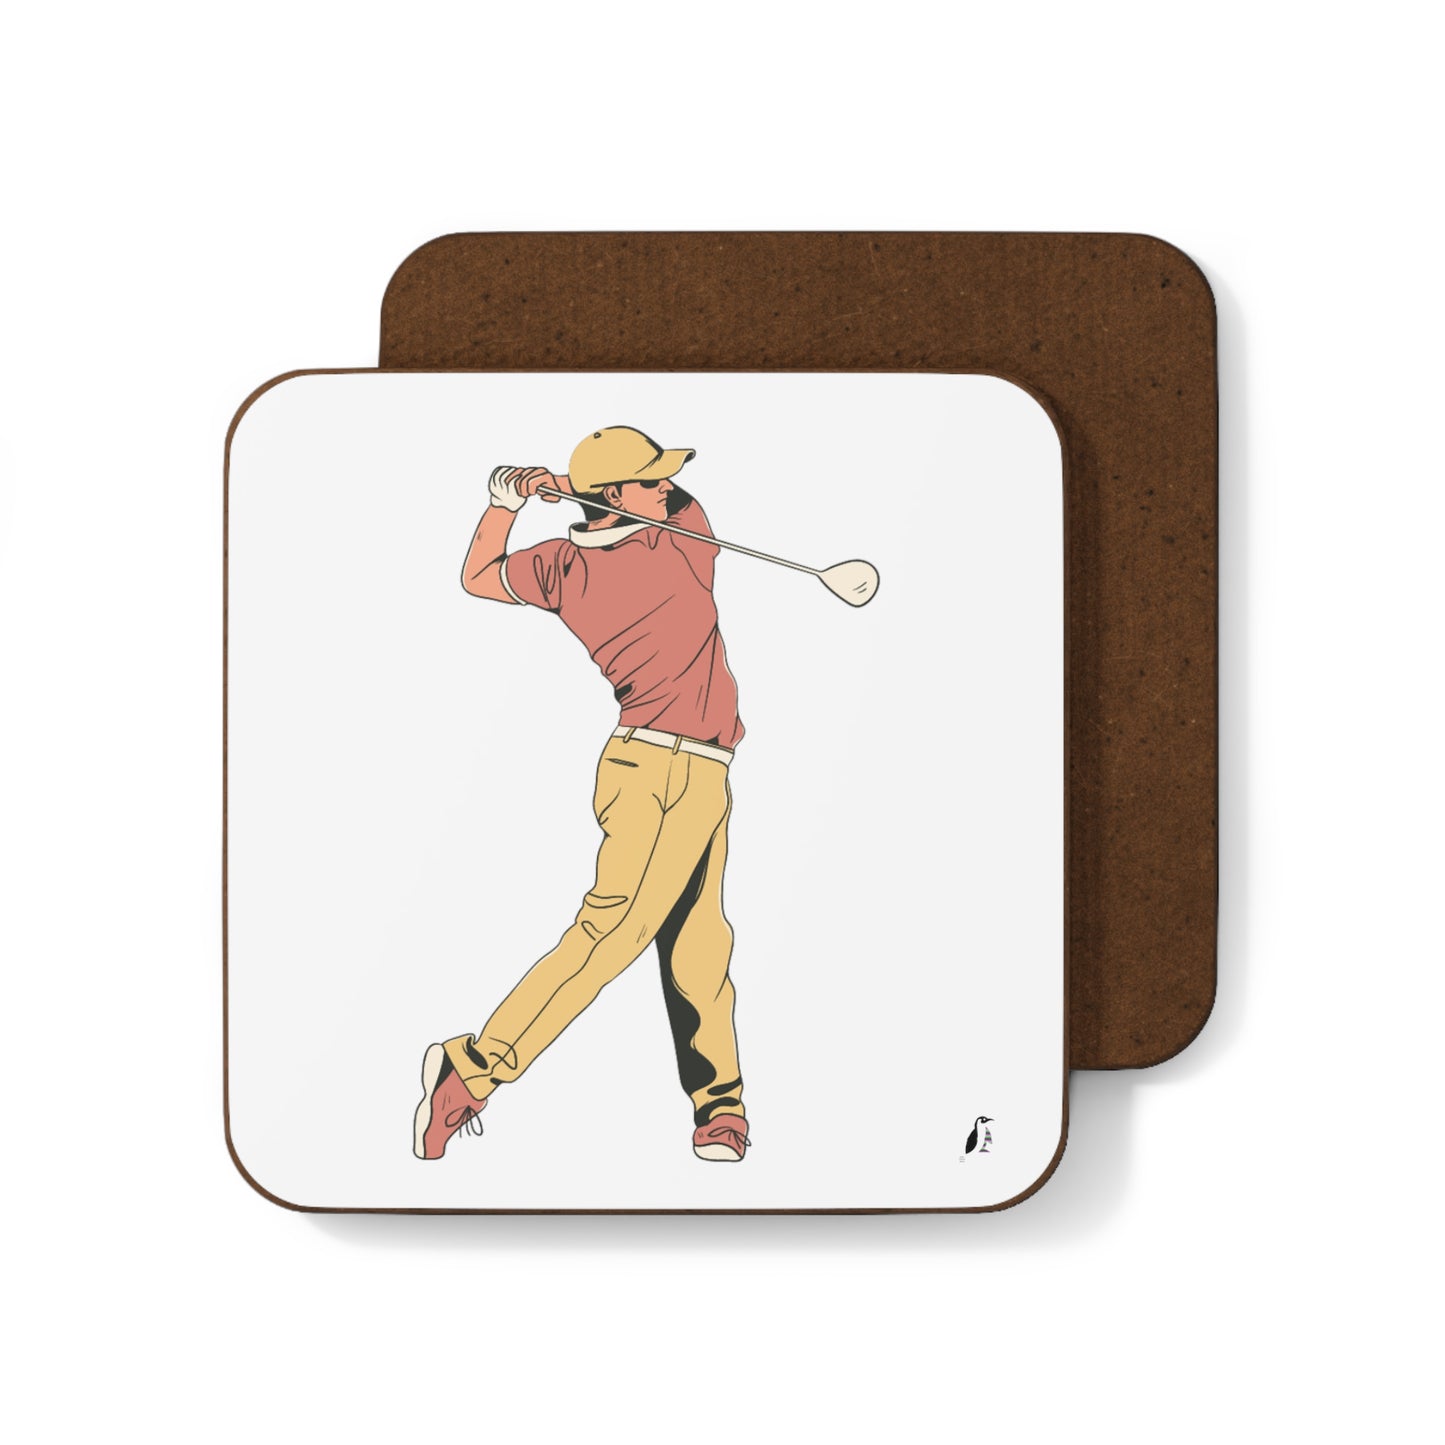 Hardboard Back Coaster: Golf White